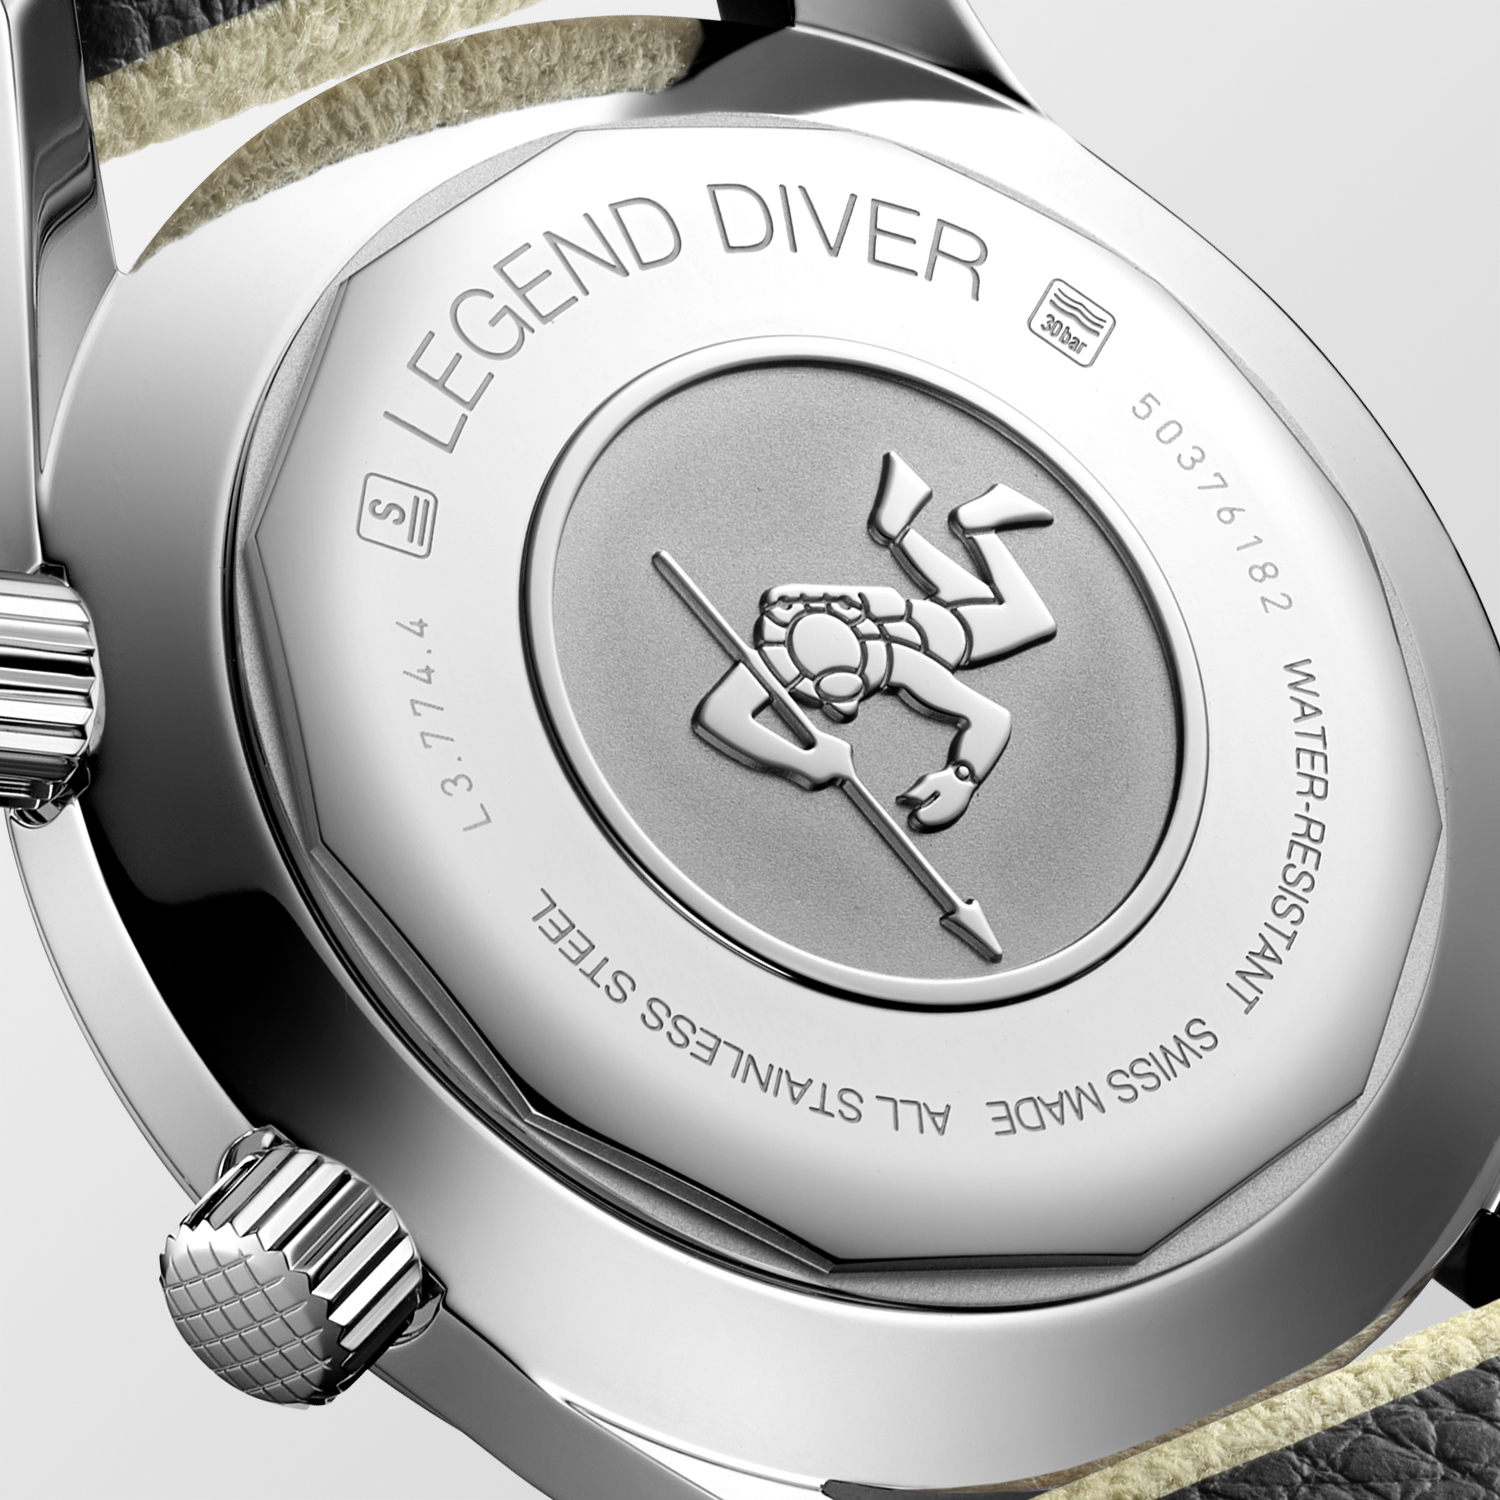 The Longines Legend Diver Watch L3.774.4.30.2 Detalle trasera